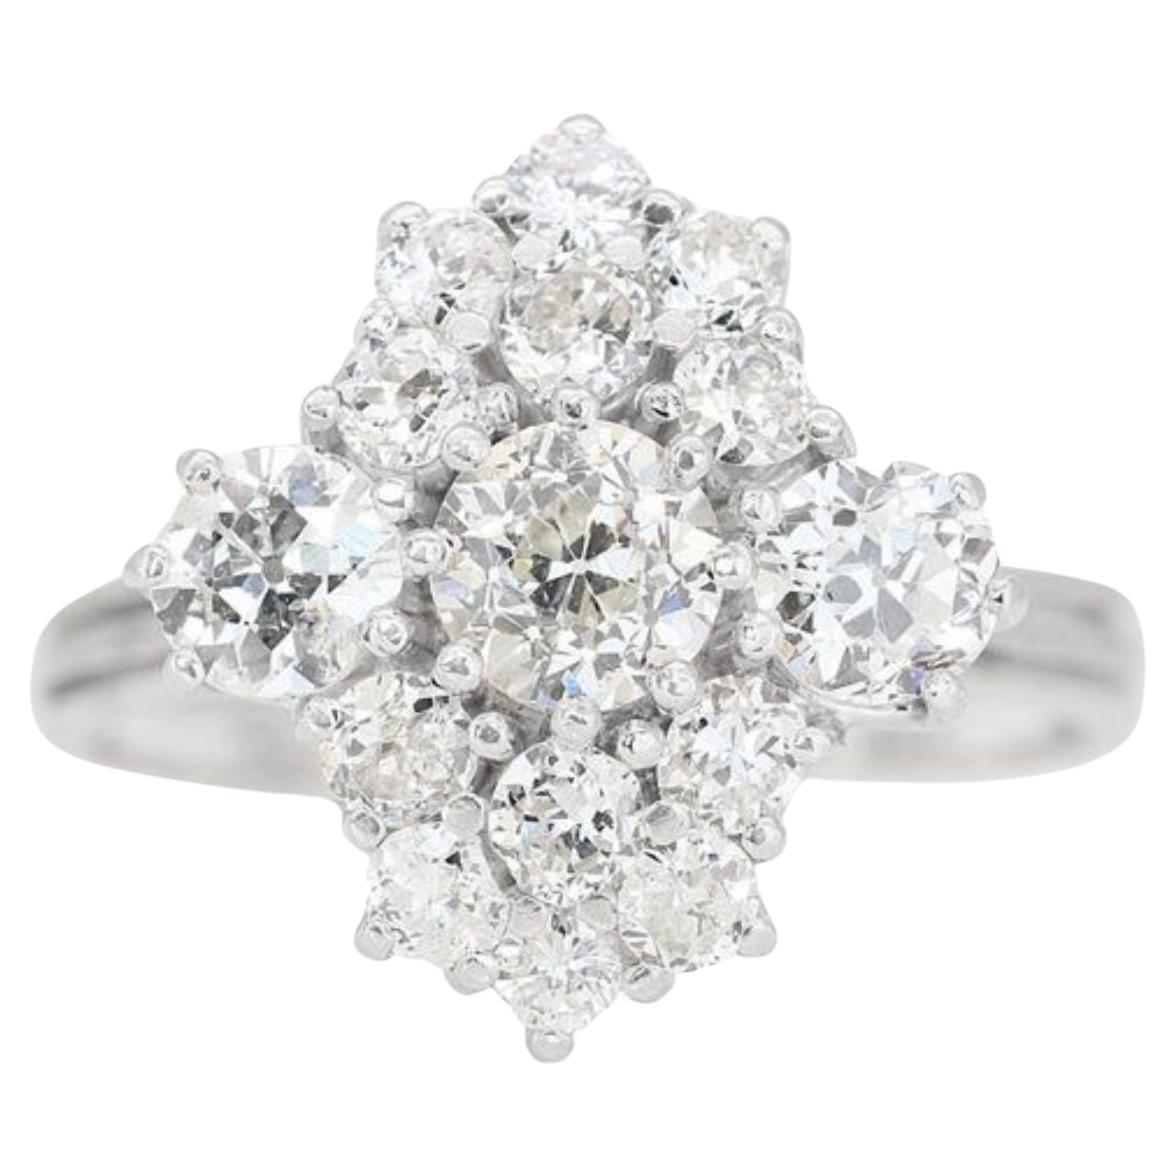 Sparkling 1.70ct Diamond Ring set in 14K White Gold For Sale